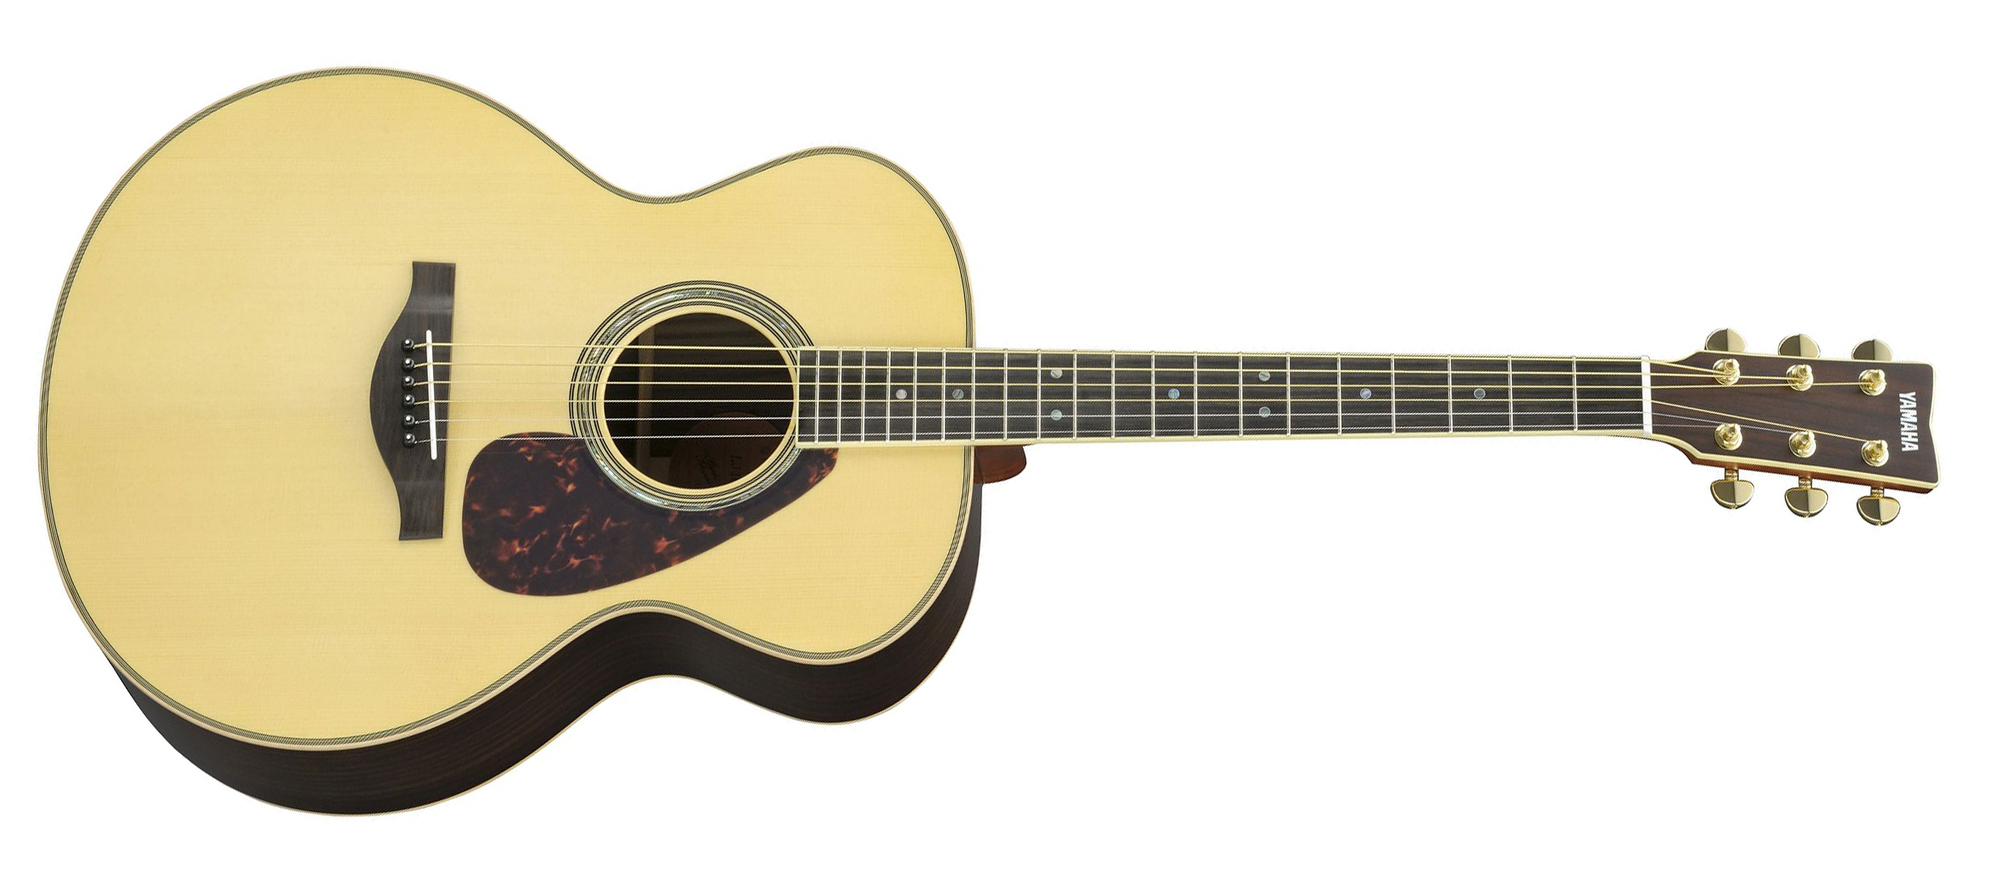 Yamaha LJ16ARE Medium Jumbo 6-String RH Acoustic Electric Guitar with Hard Bag in Natural